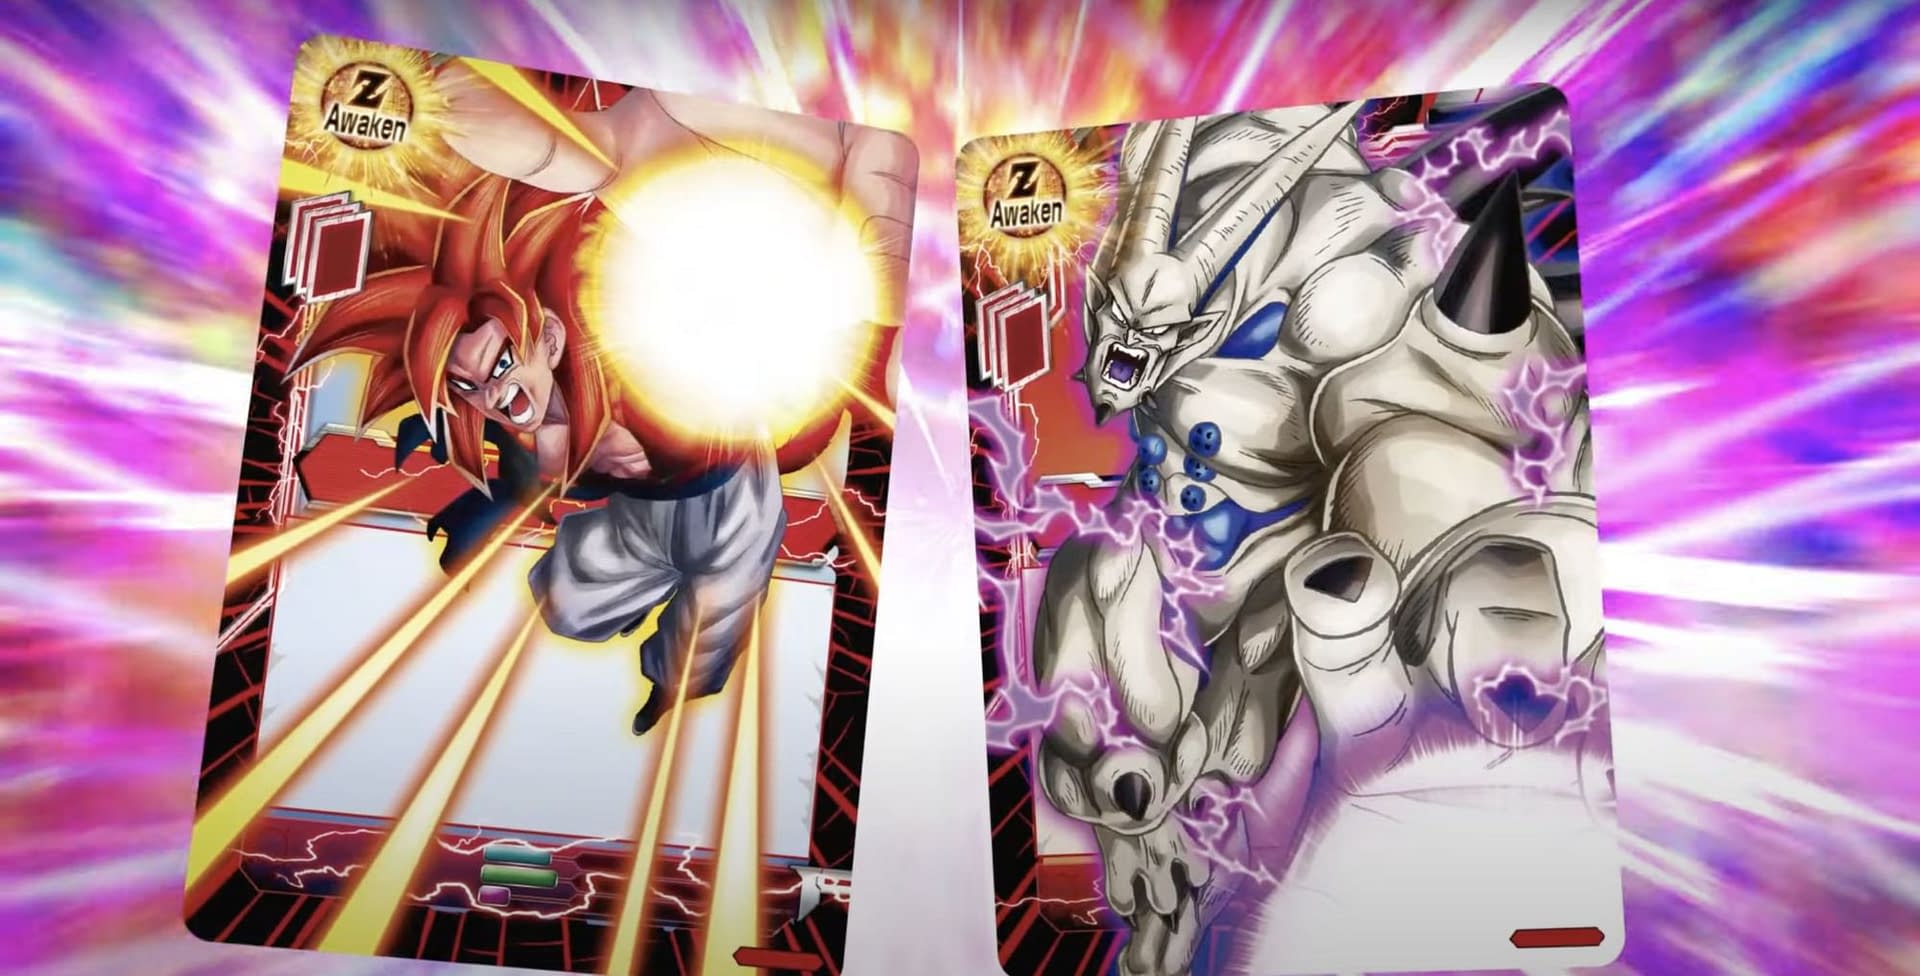 Dragon Ball Super Card Game Reveals Zenkai Series At SDCC